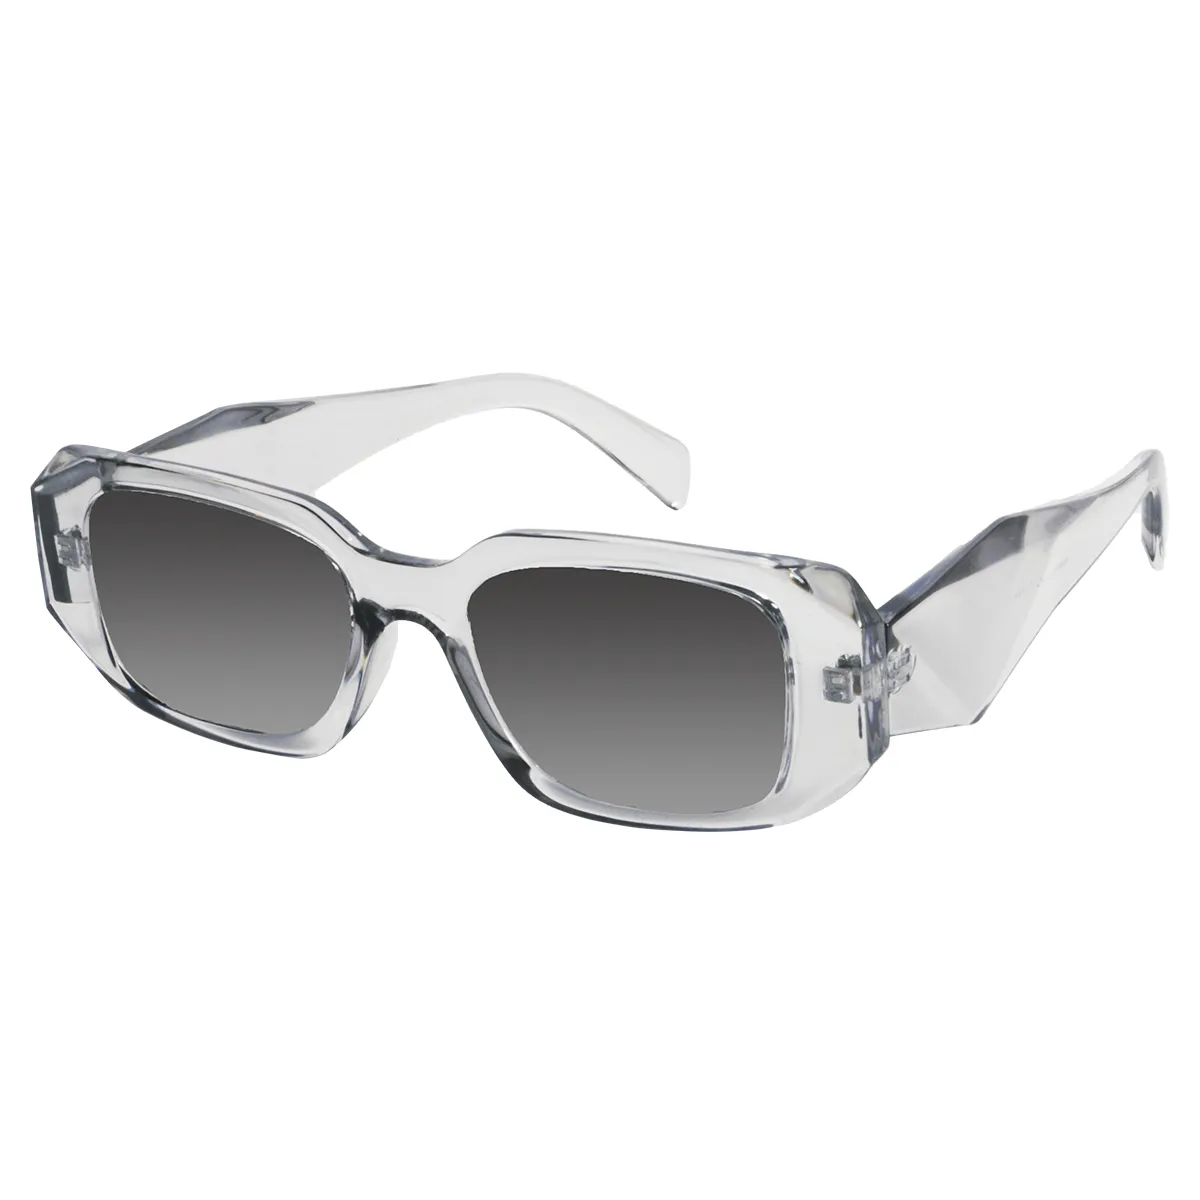 Arianwen -  Transparent light gray Sunglasses for Women